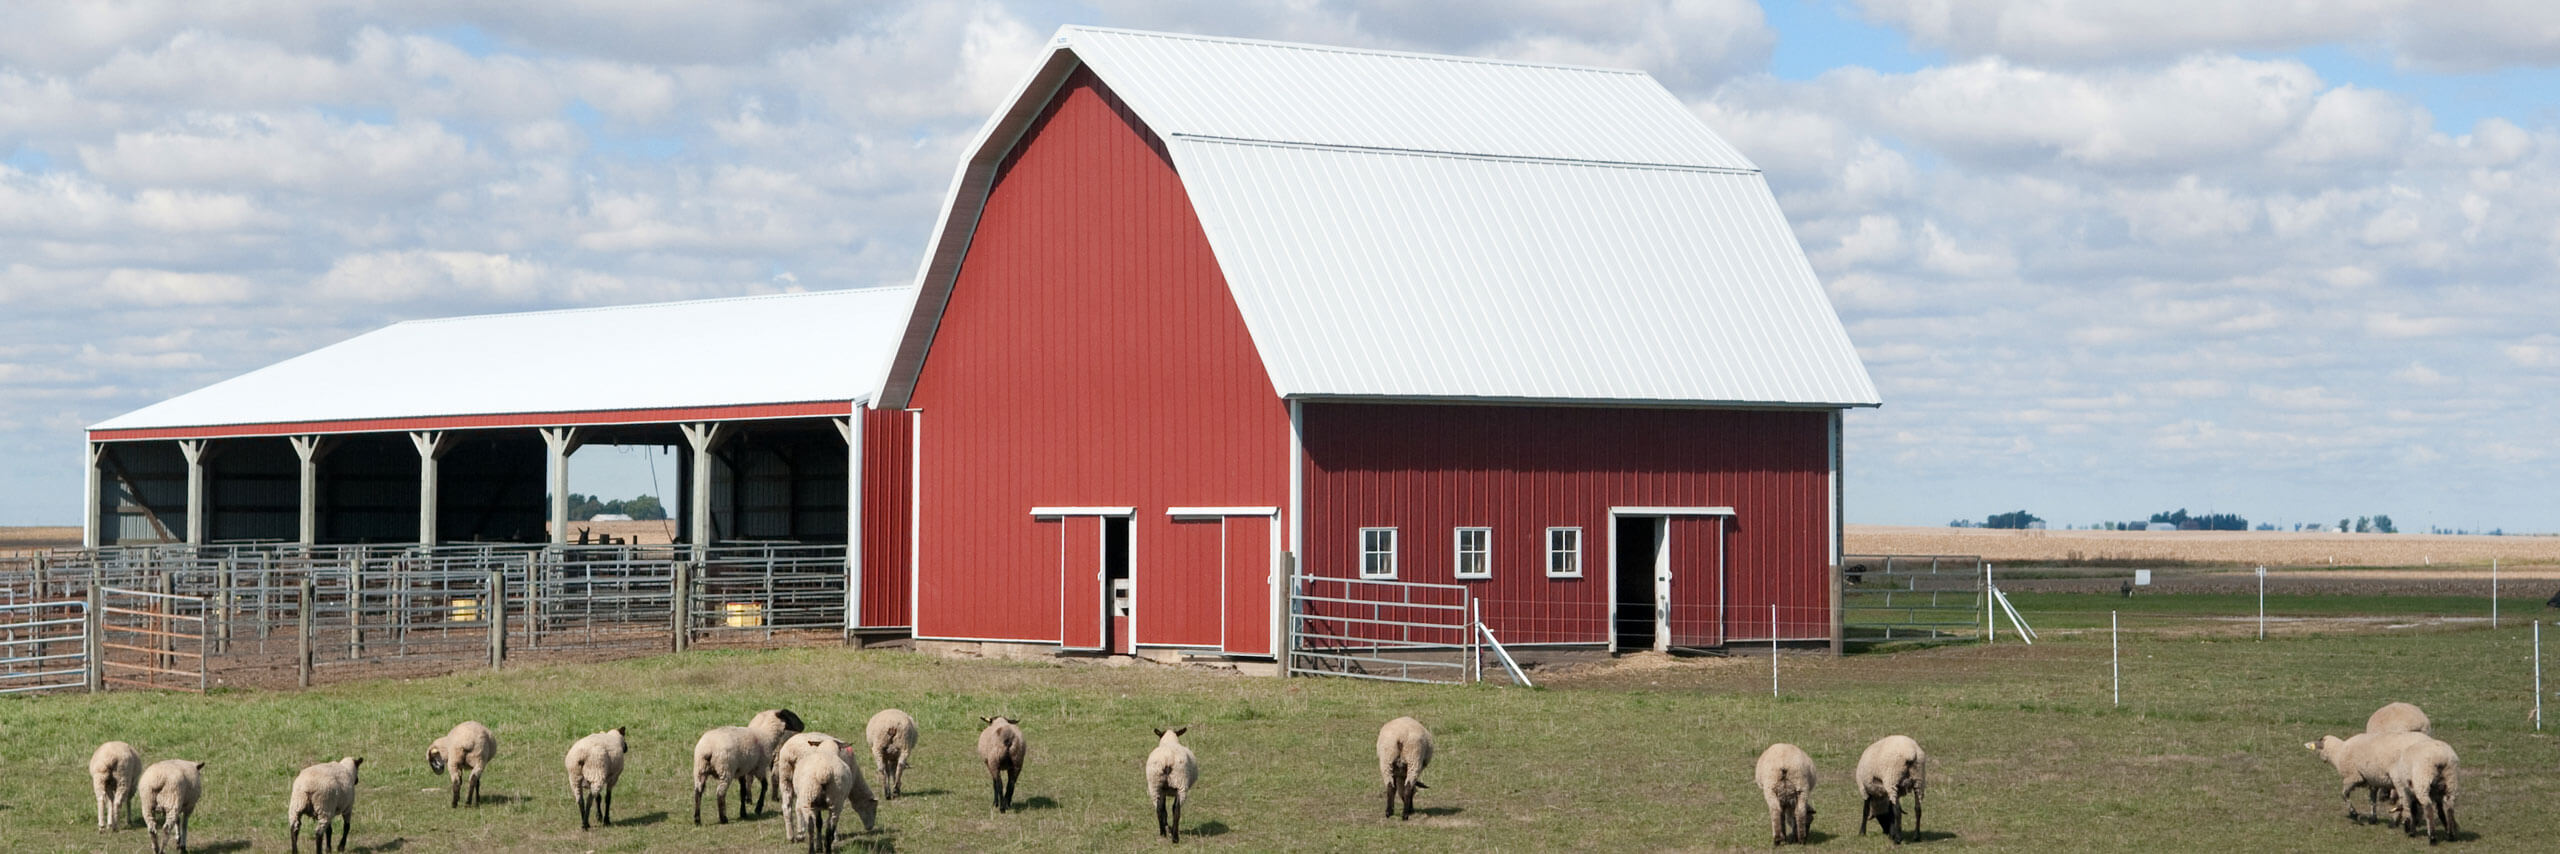 Sheep graze outside of the barn on the University Farm.